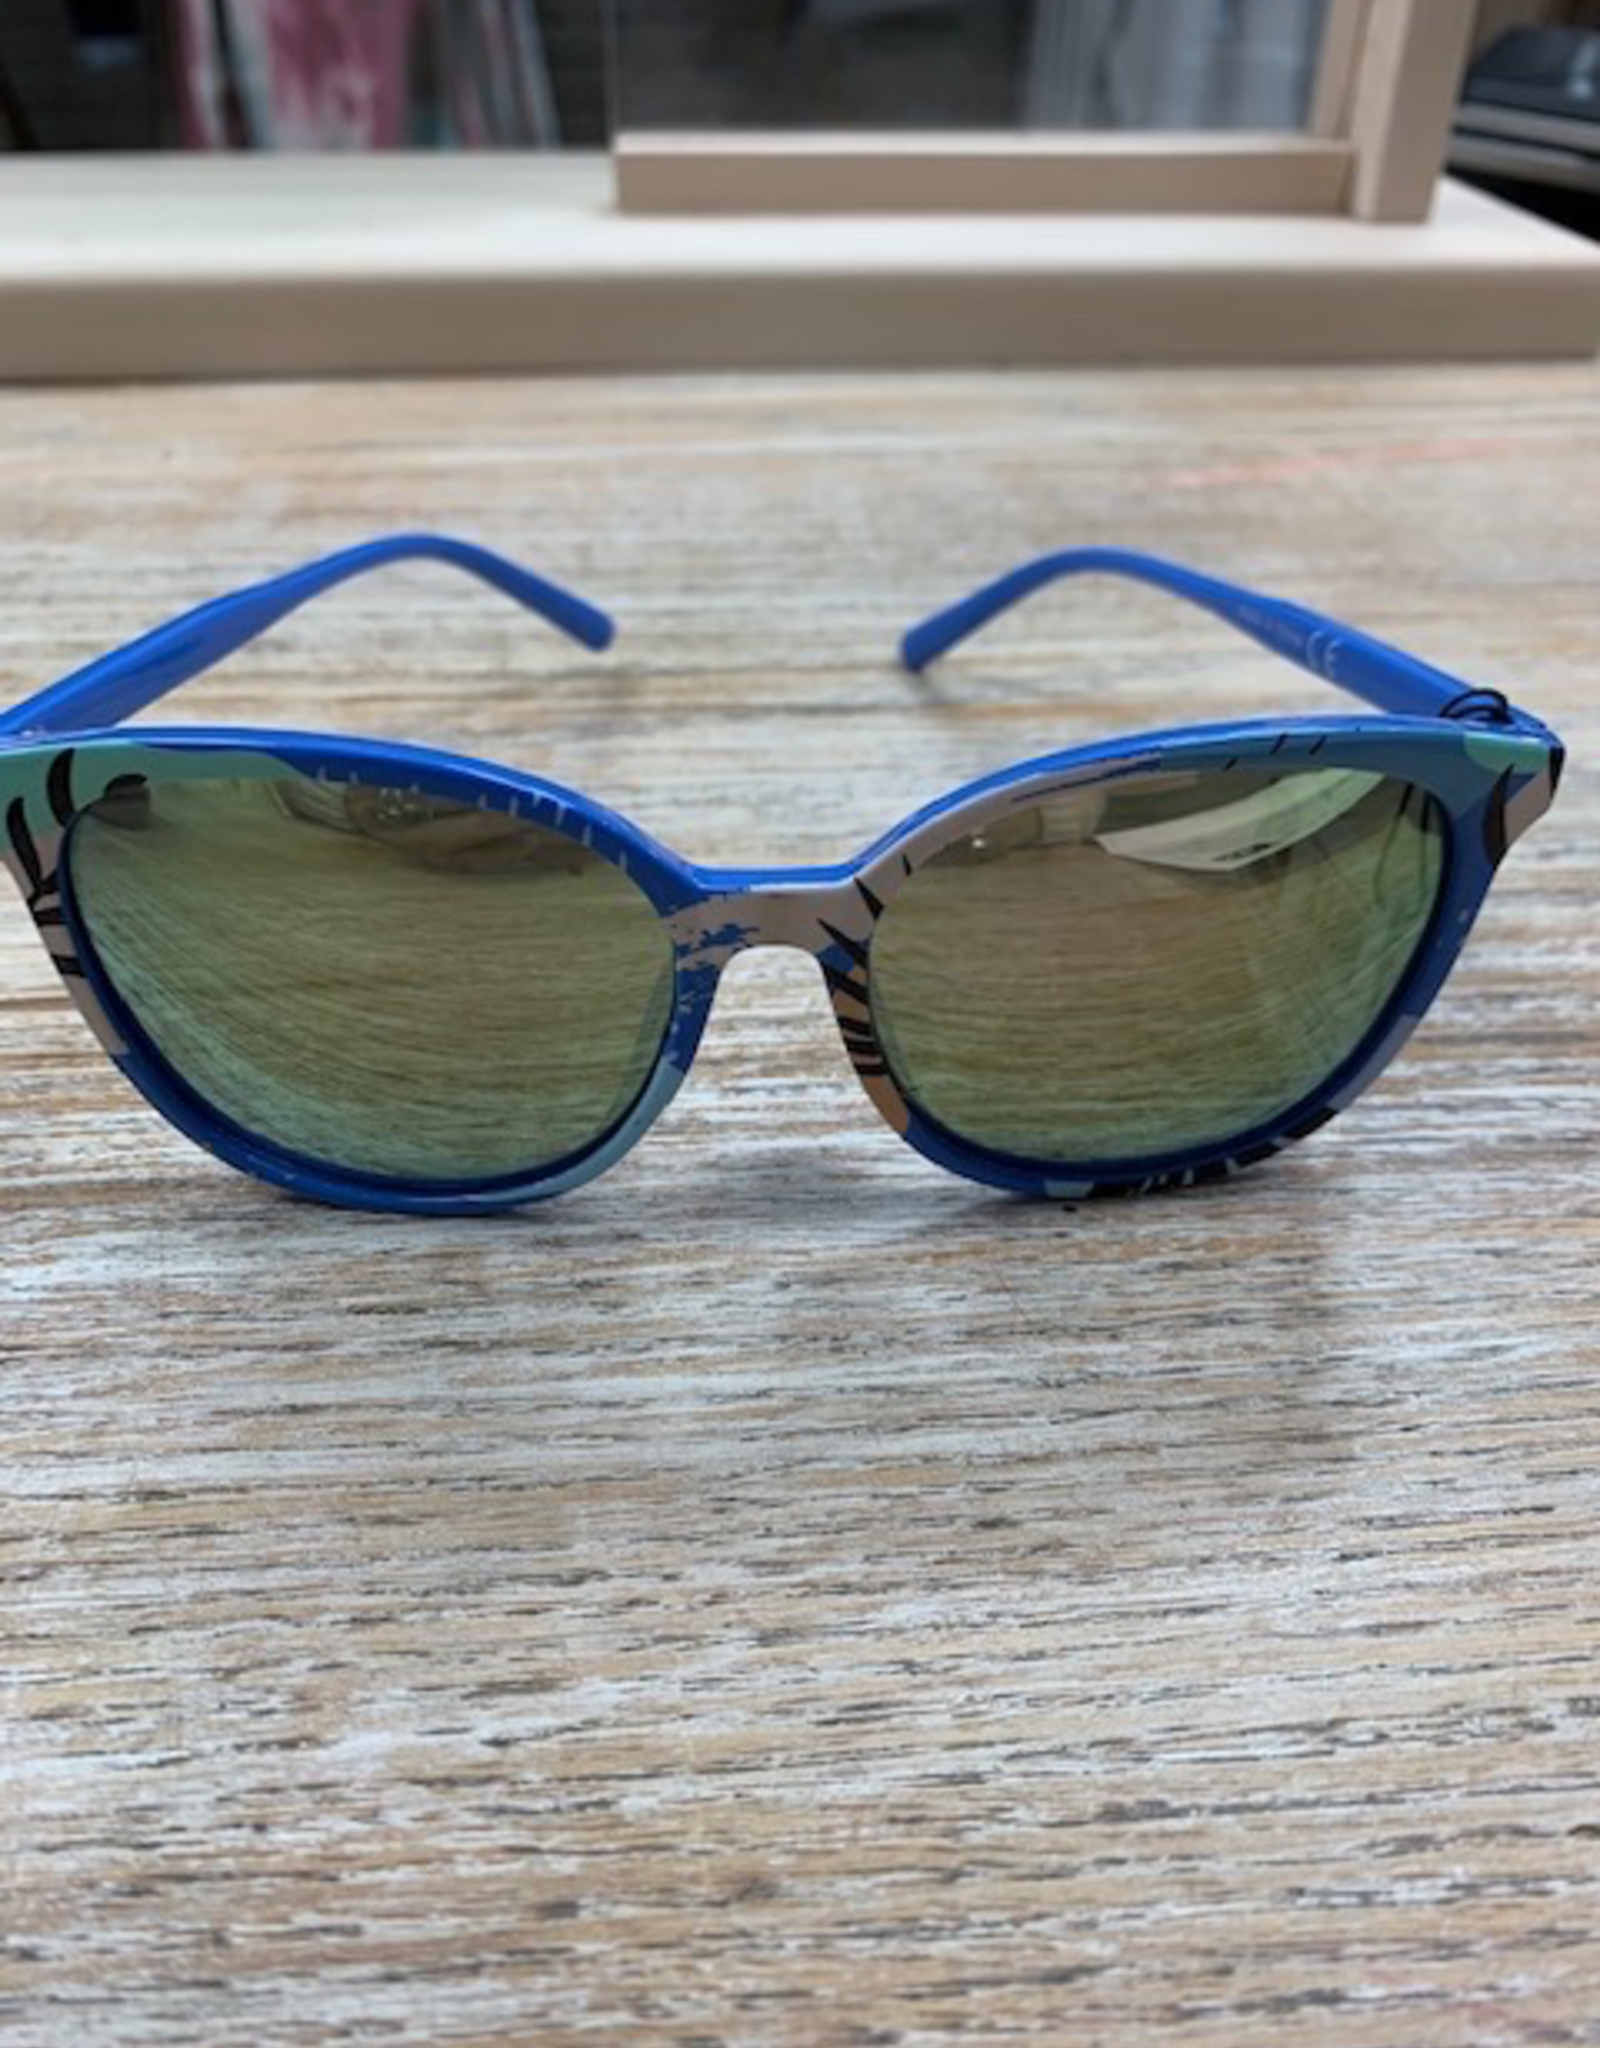 Sunglasses Tropical Sunglasses W/ Case